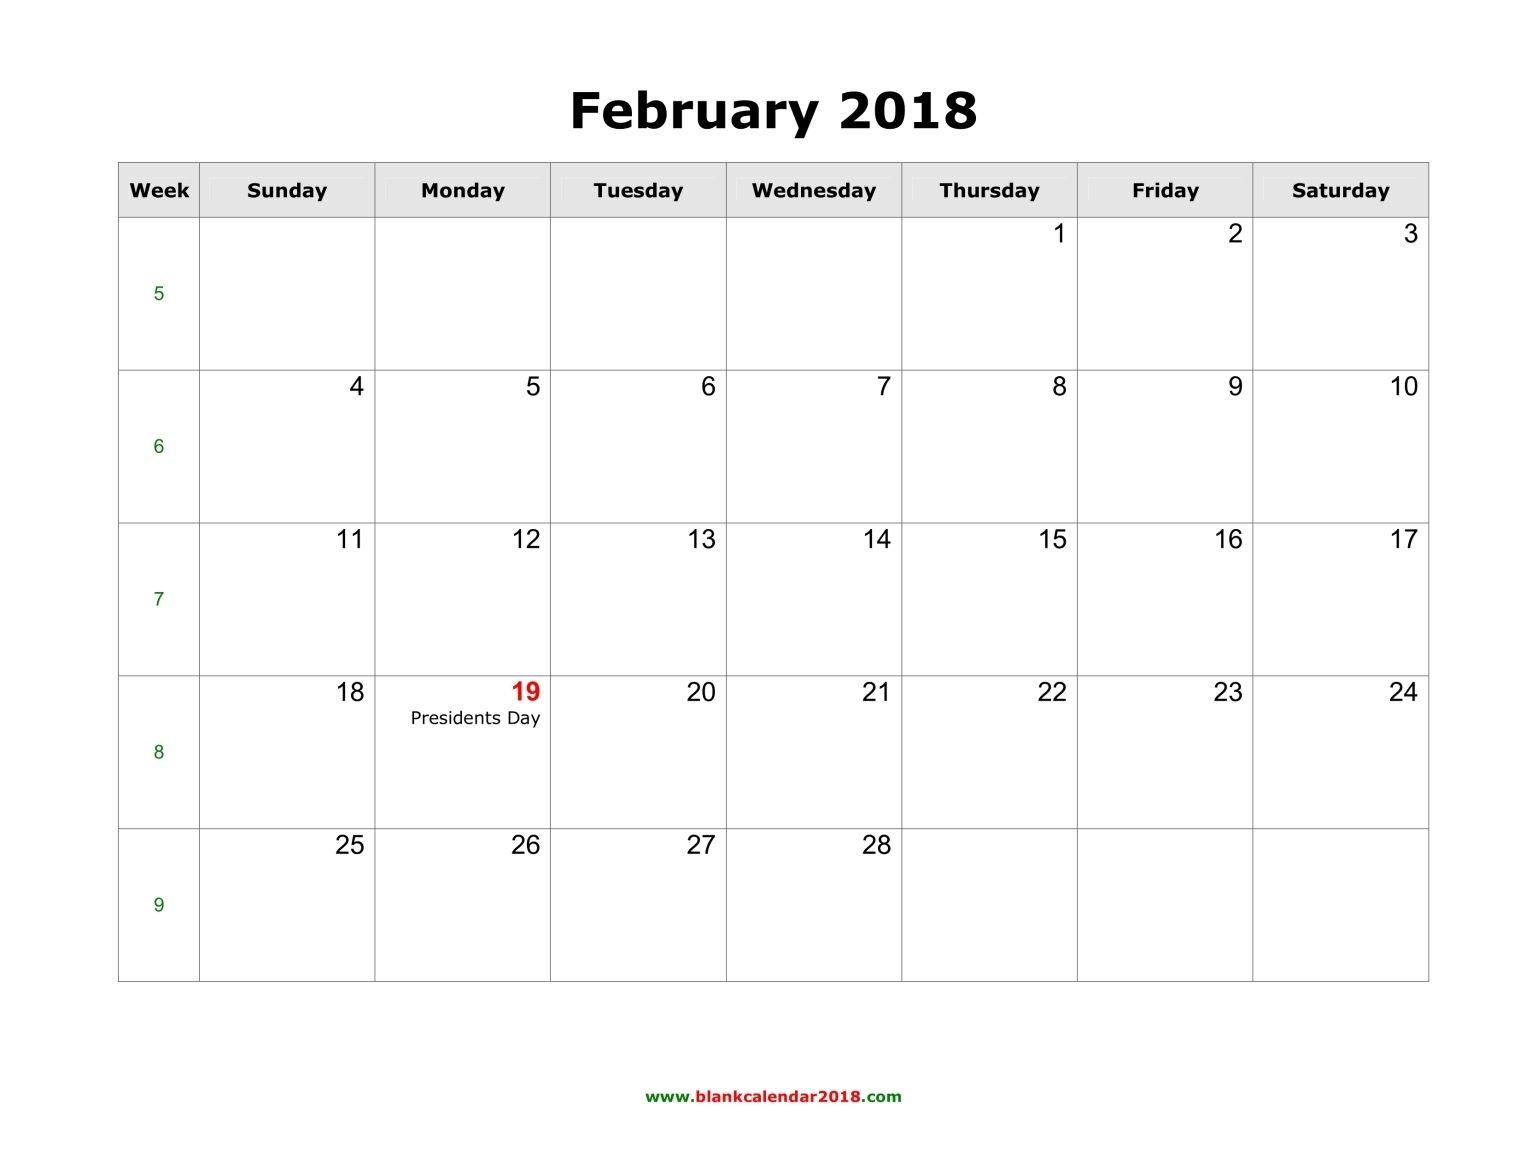 February 2018 Calendar Wallpapers - Wallpaper Cave